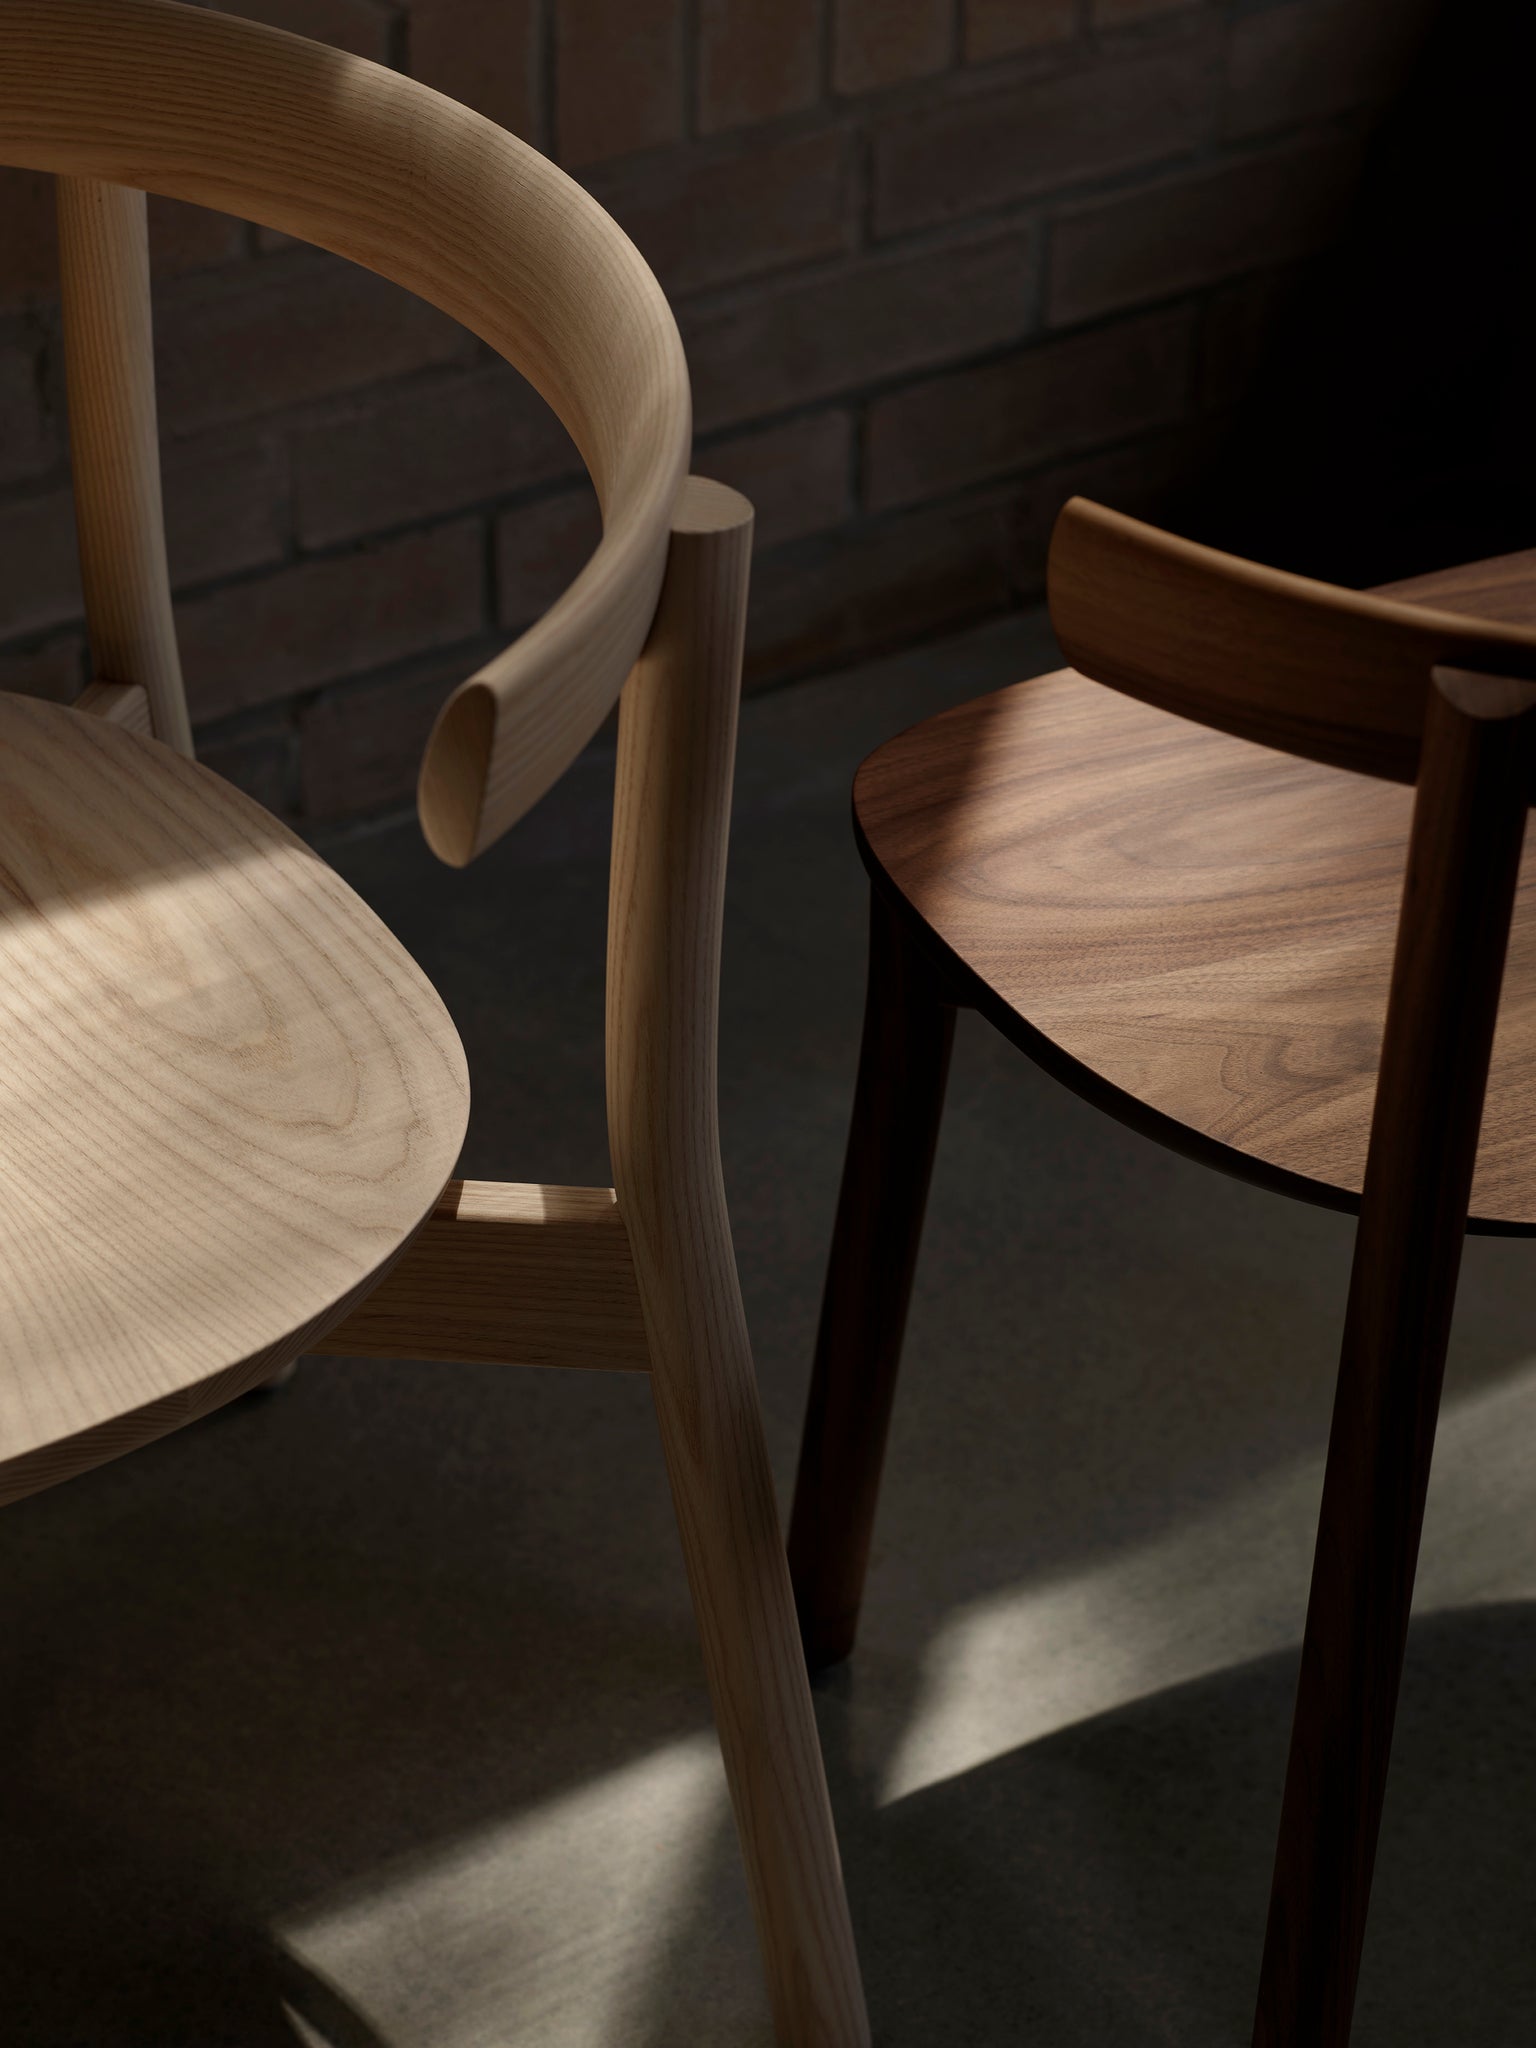 Mast Furniture Torii chairs in walnut and ash